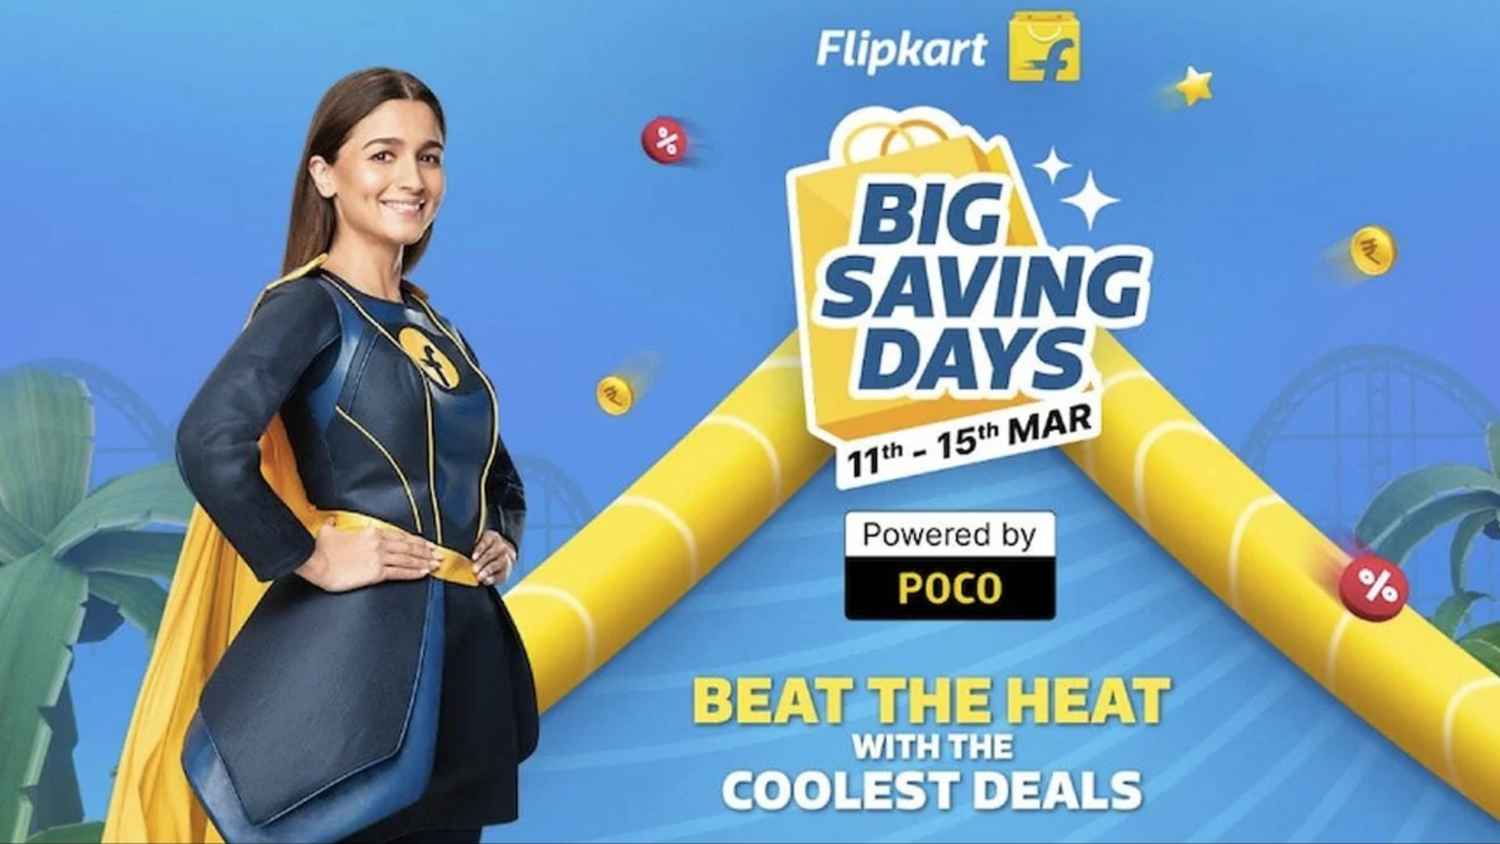 5 best 5G smartphone deals on Flipkart Big Saving Days sale